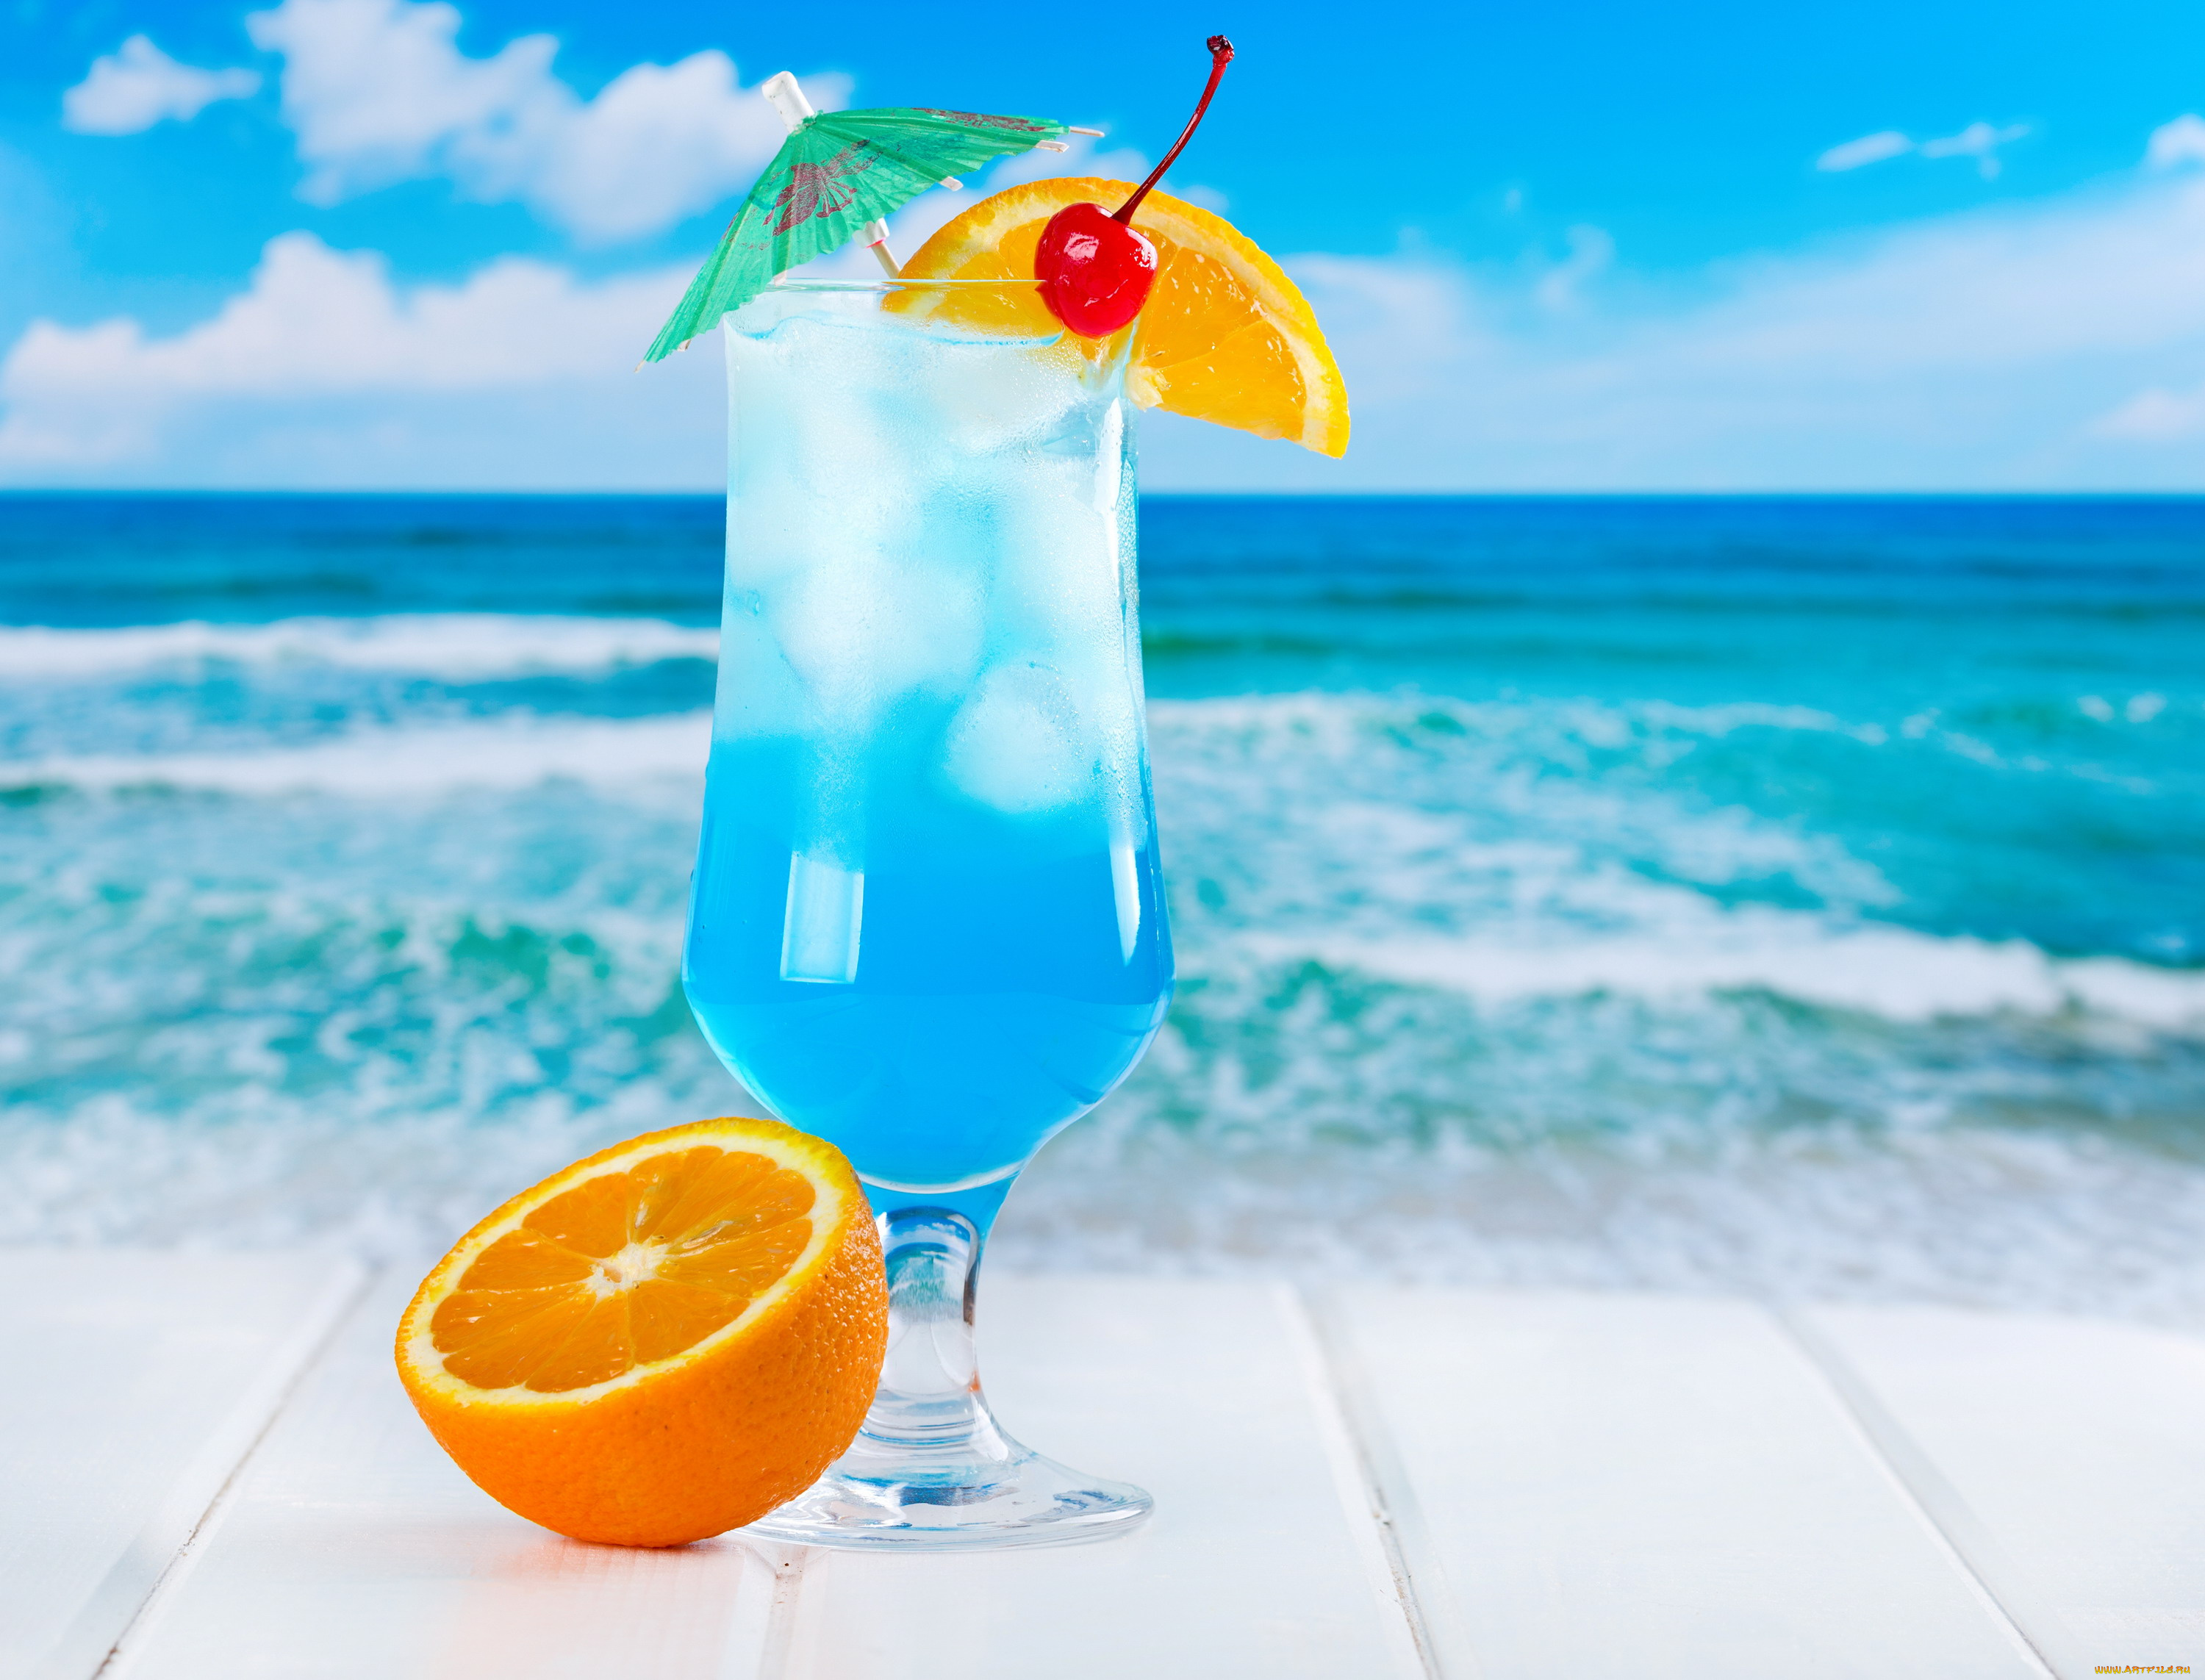 еда, напитки, , коктейль, вишня, апельсин, фрукты, море, tropical, curacao, orange, drink, fruits, blue, cocktail, коктейль, fresh, пляж, лед